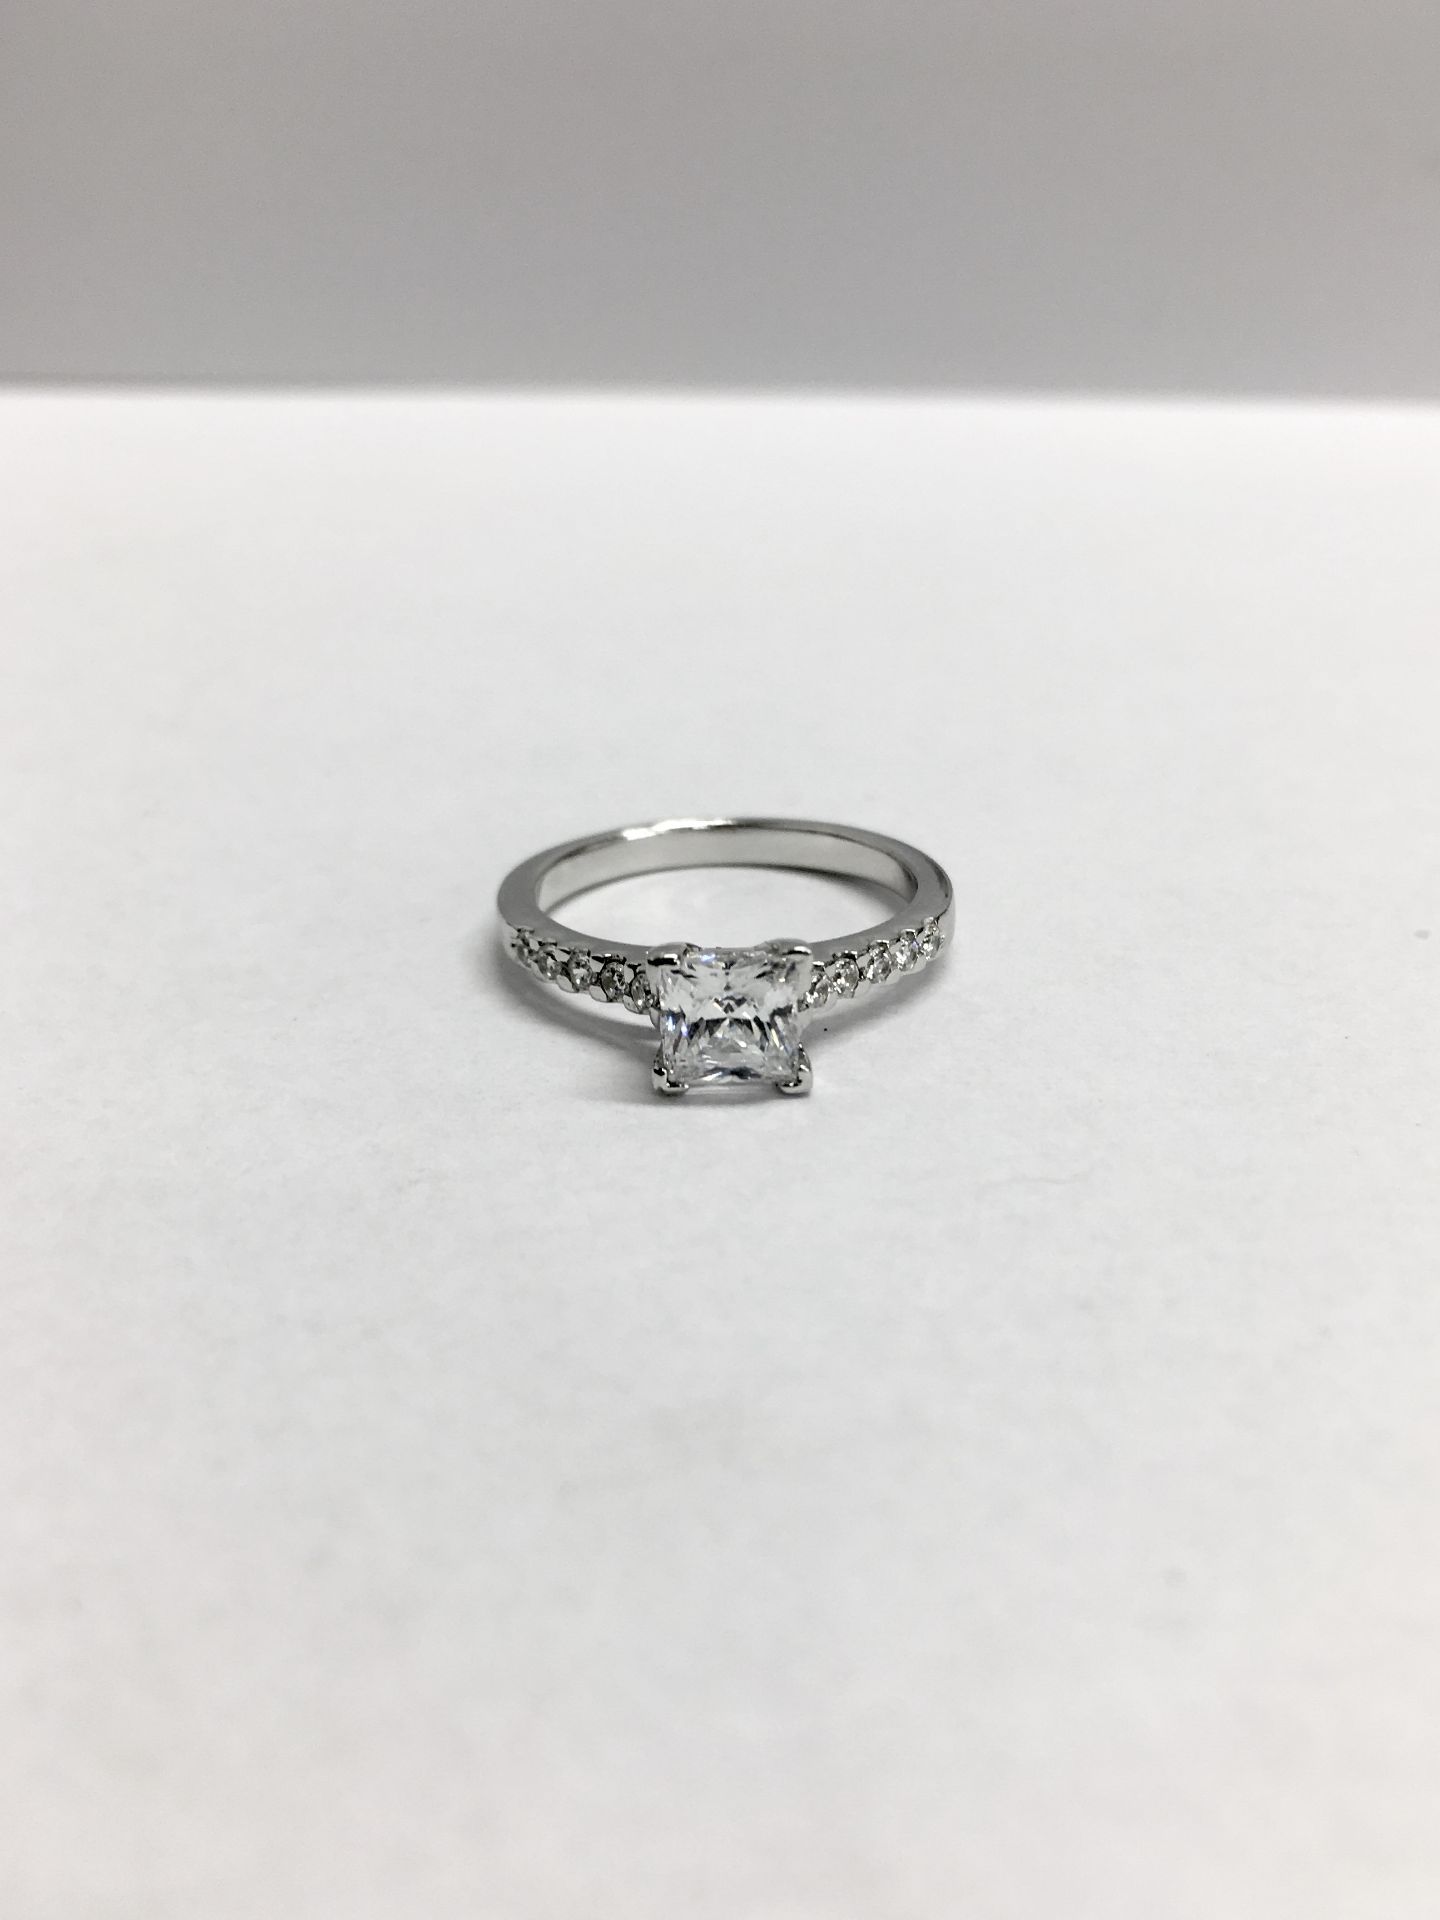 Platinum diamond solitaire ring,0.45ct princess,h colour si2 clarity,4.15gms platinum ,10 diamonds - Image 2 of 3